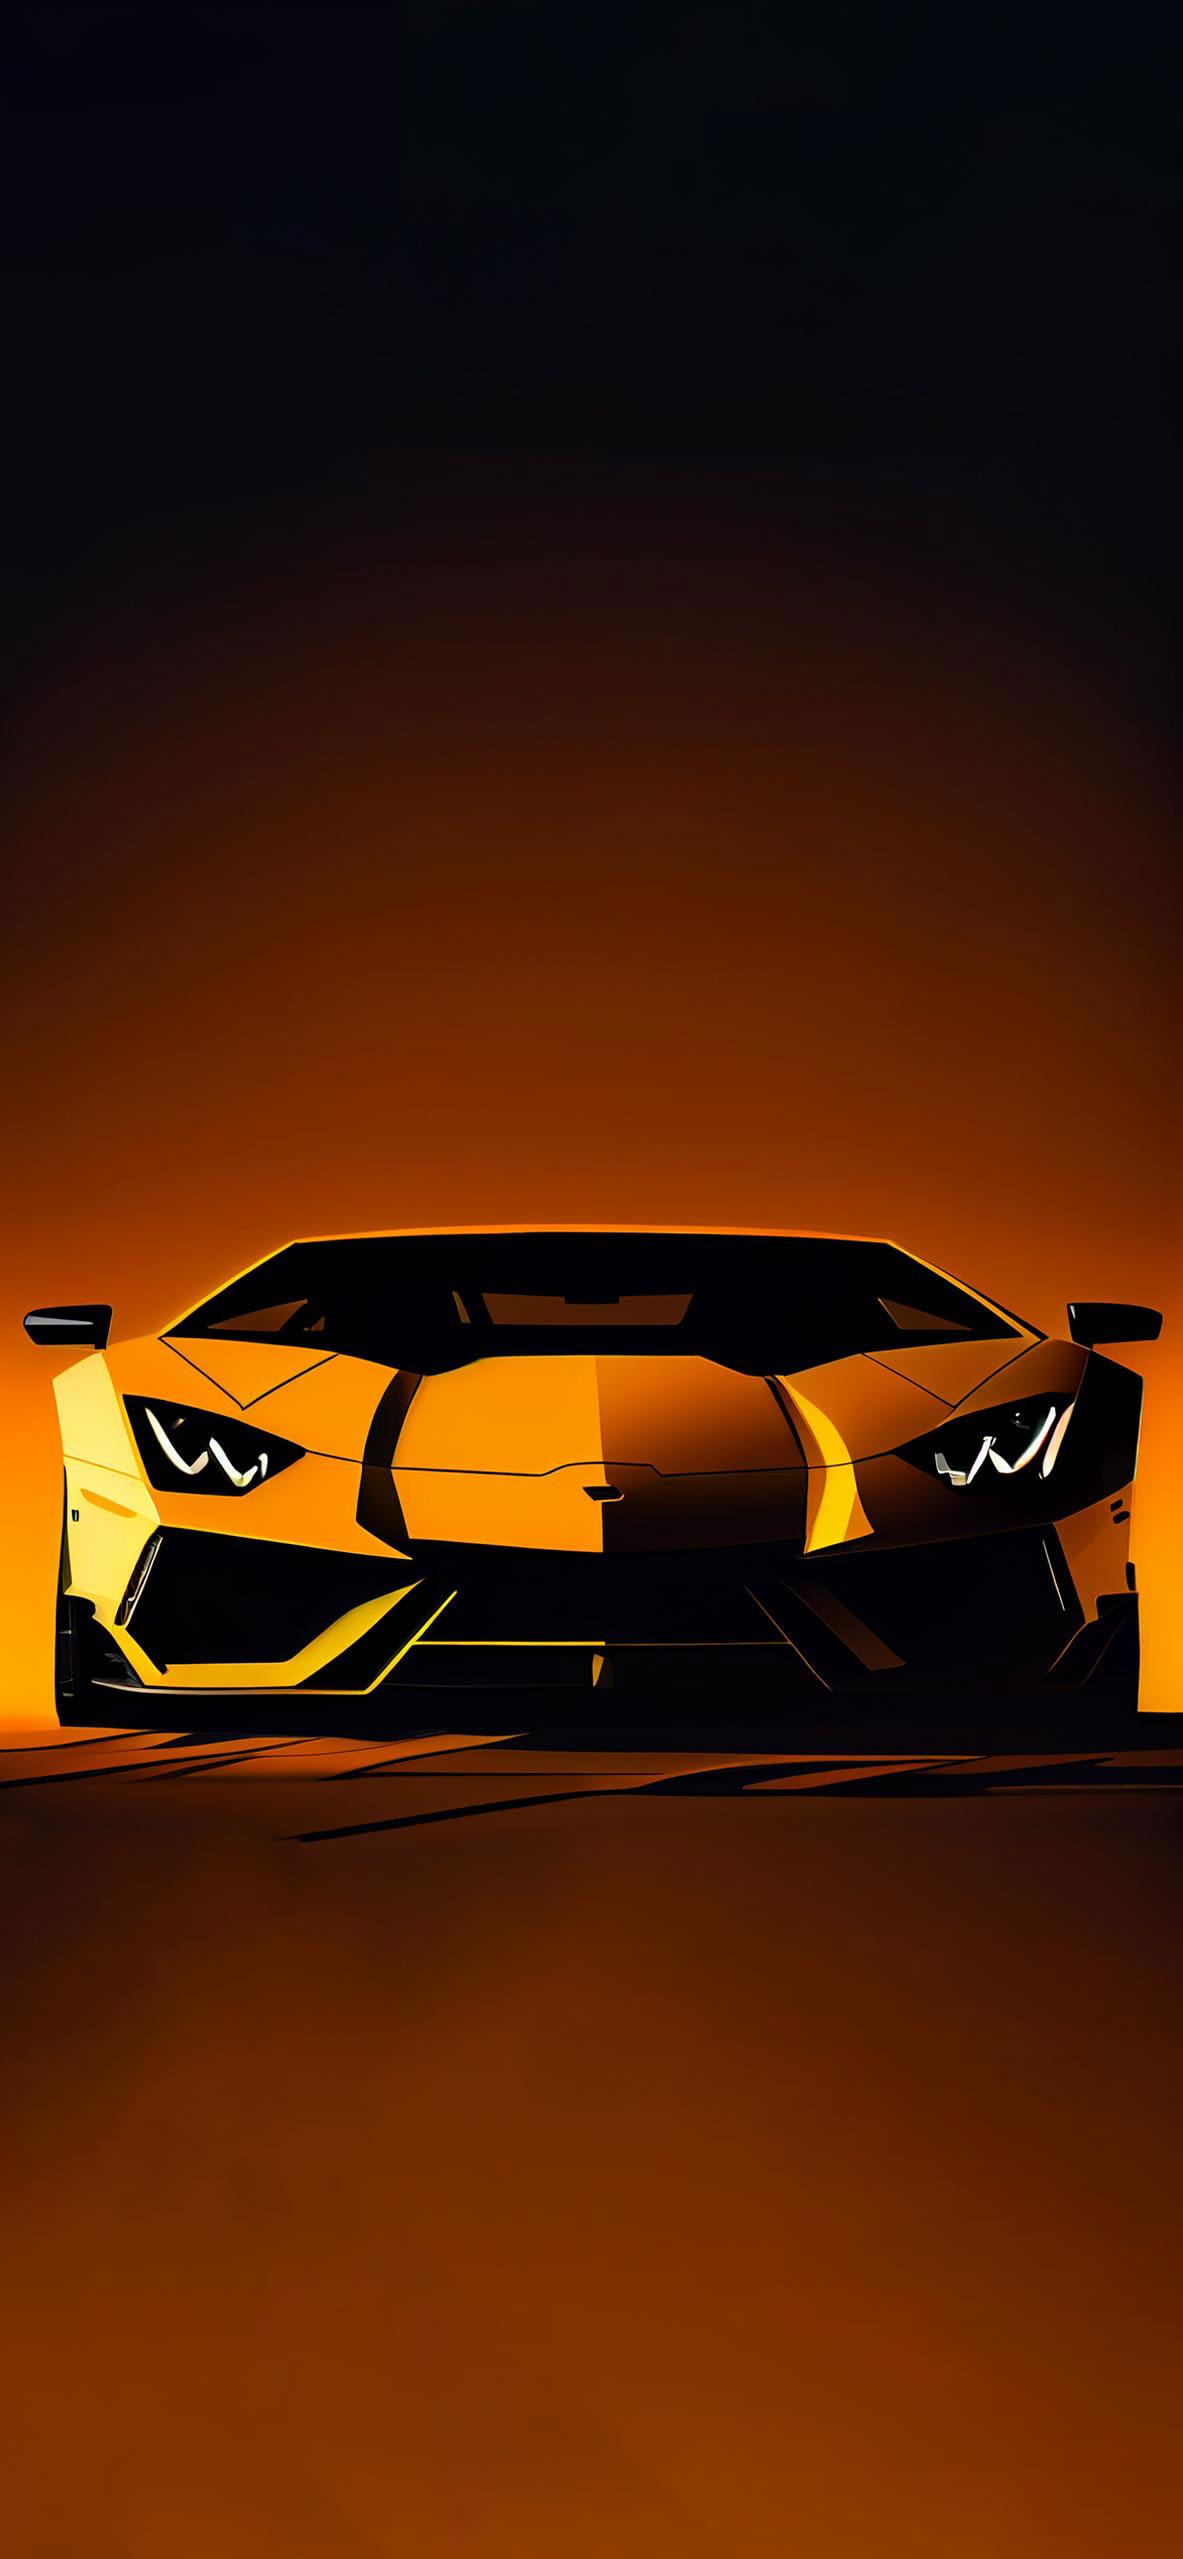 3Wallpapers for iPhone on Twitter iPhone Wallpaper Lamborghini  Cars  Moto Lamborghini  Download in HD gt httpstcoXuujY4dntR  httpstcoBEIwqSmgjN  Twitter